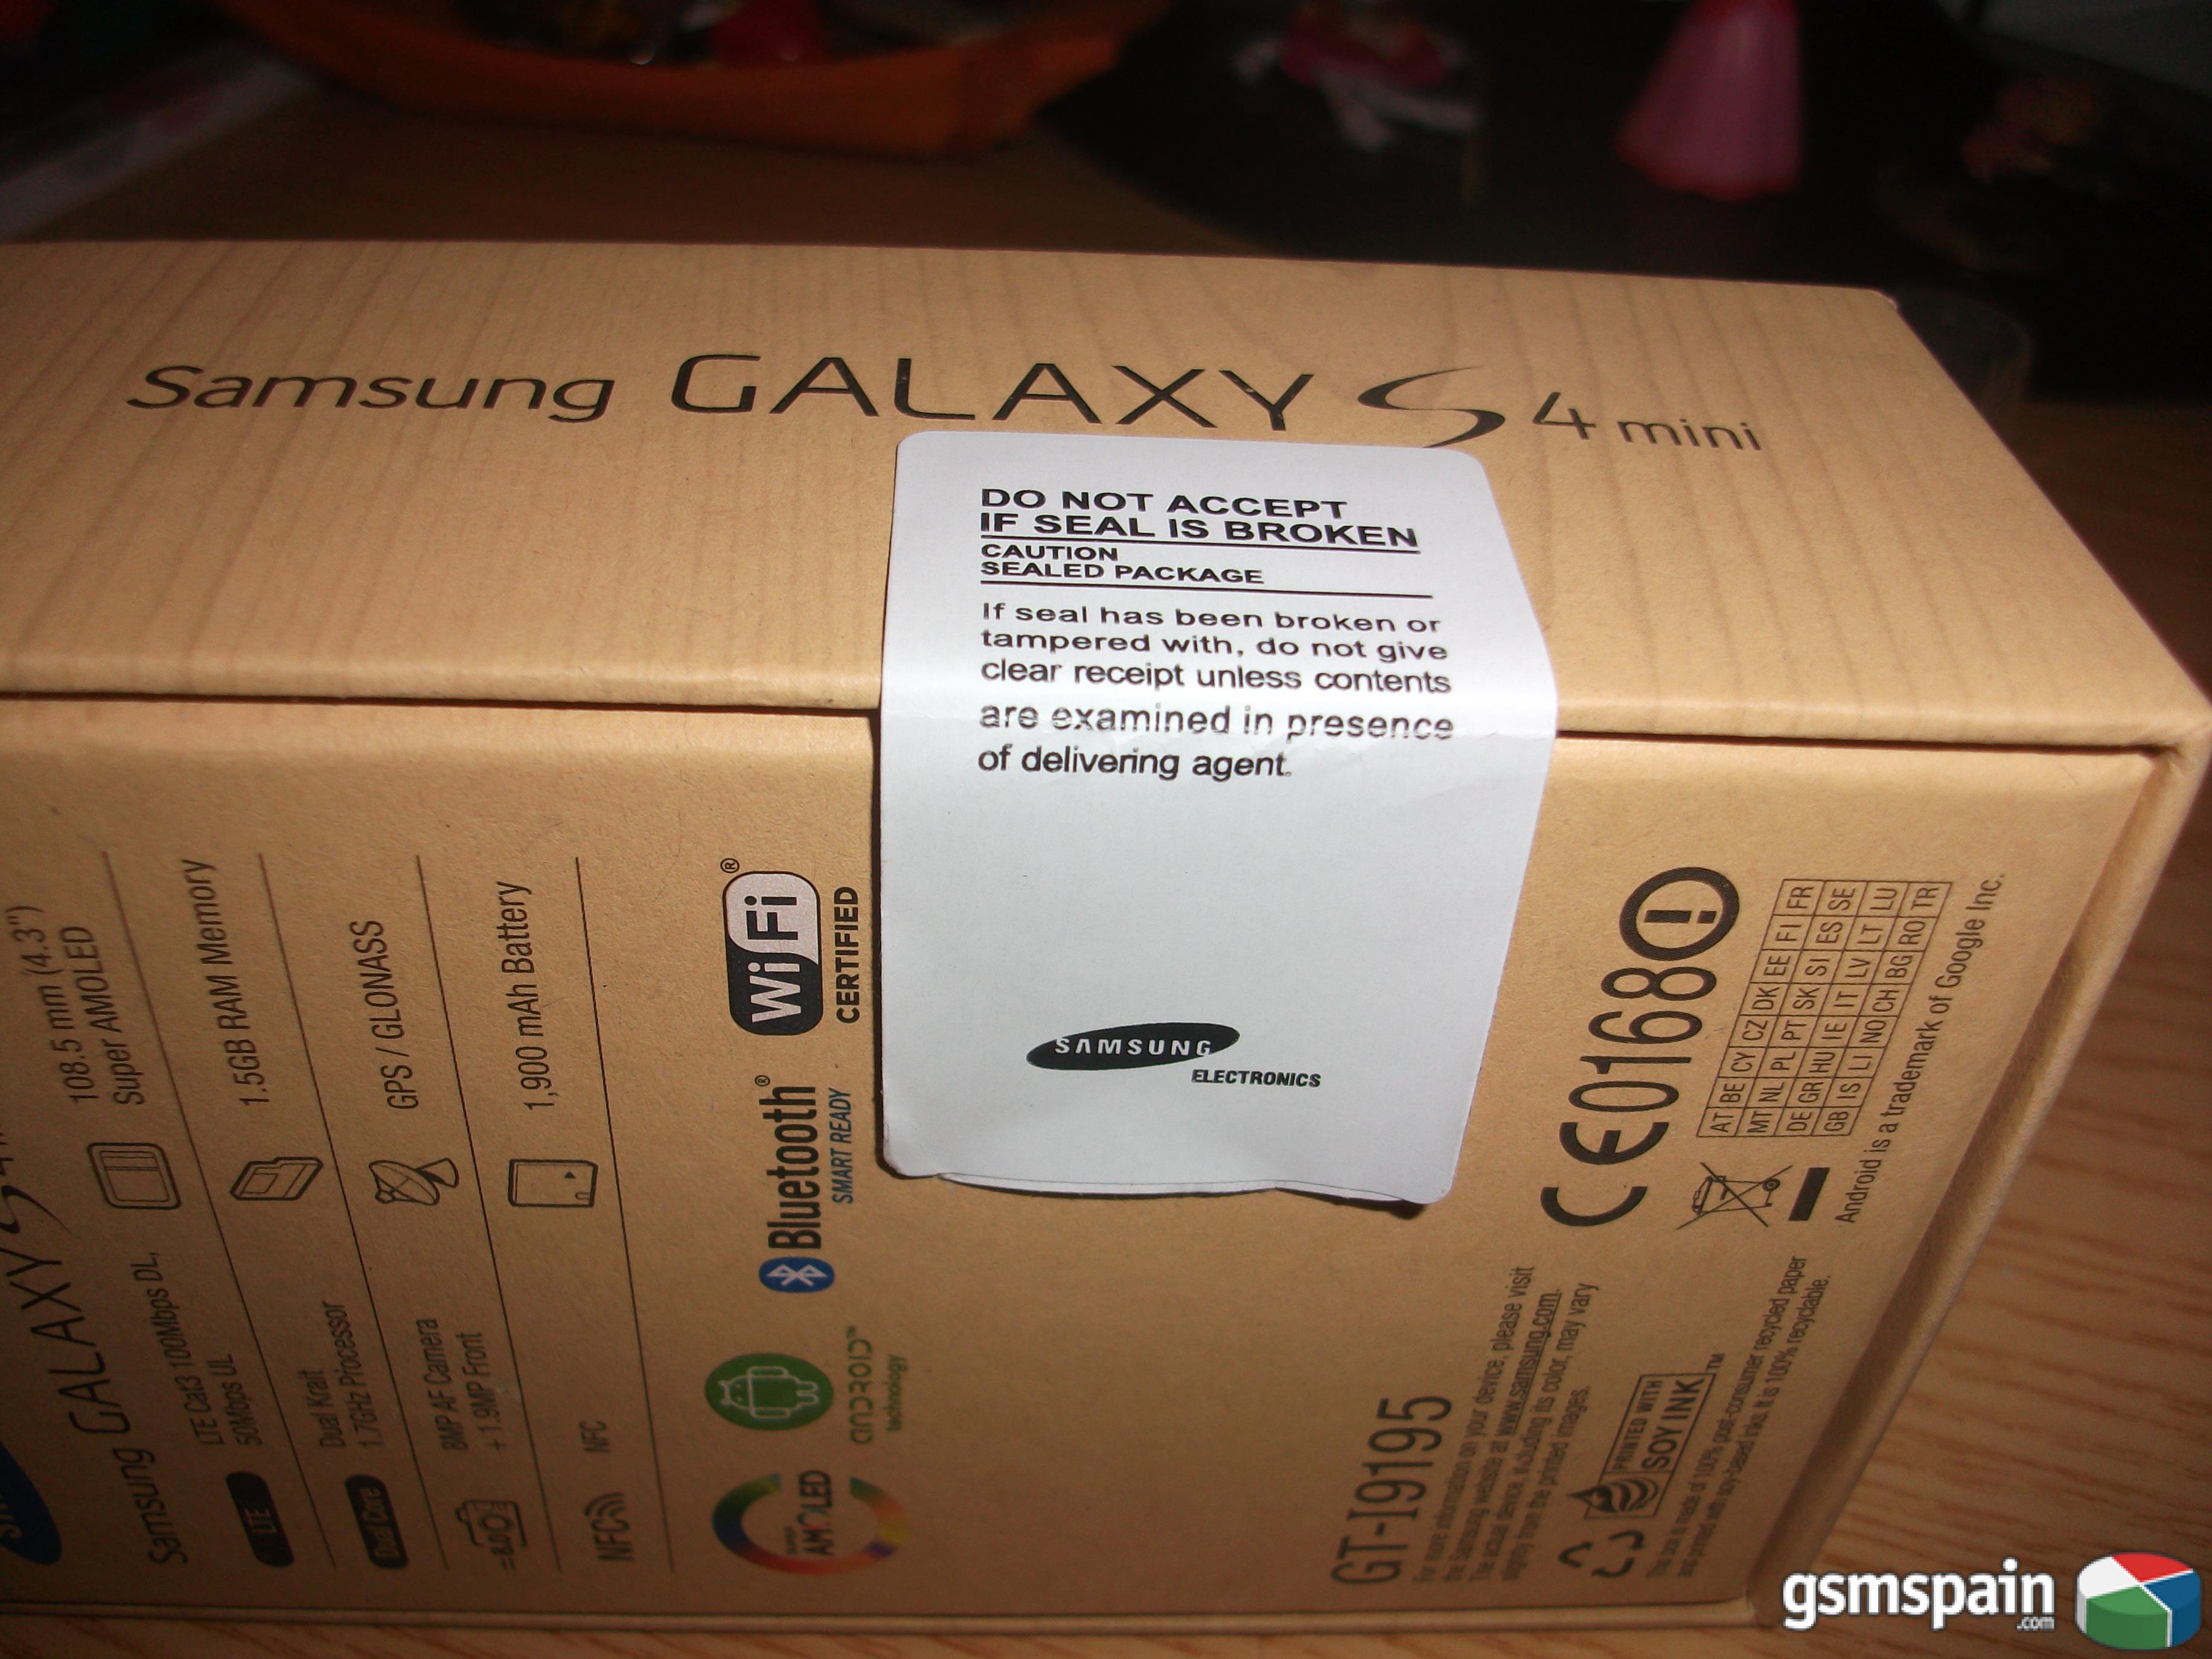 [AYUDA] Samsung Galaxy S4 mini de Pixmania falso?